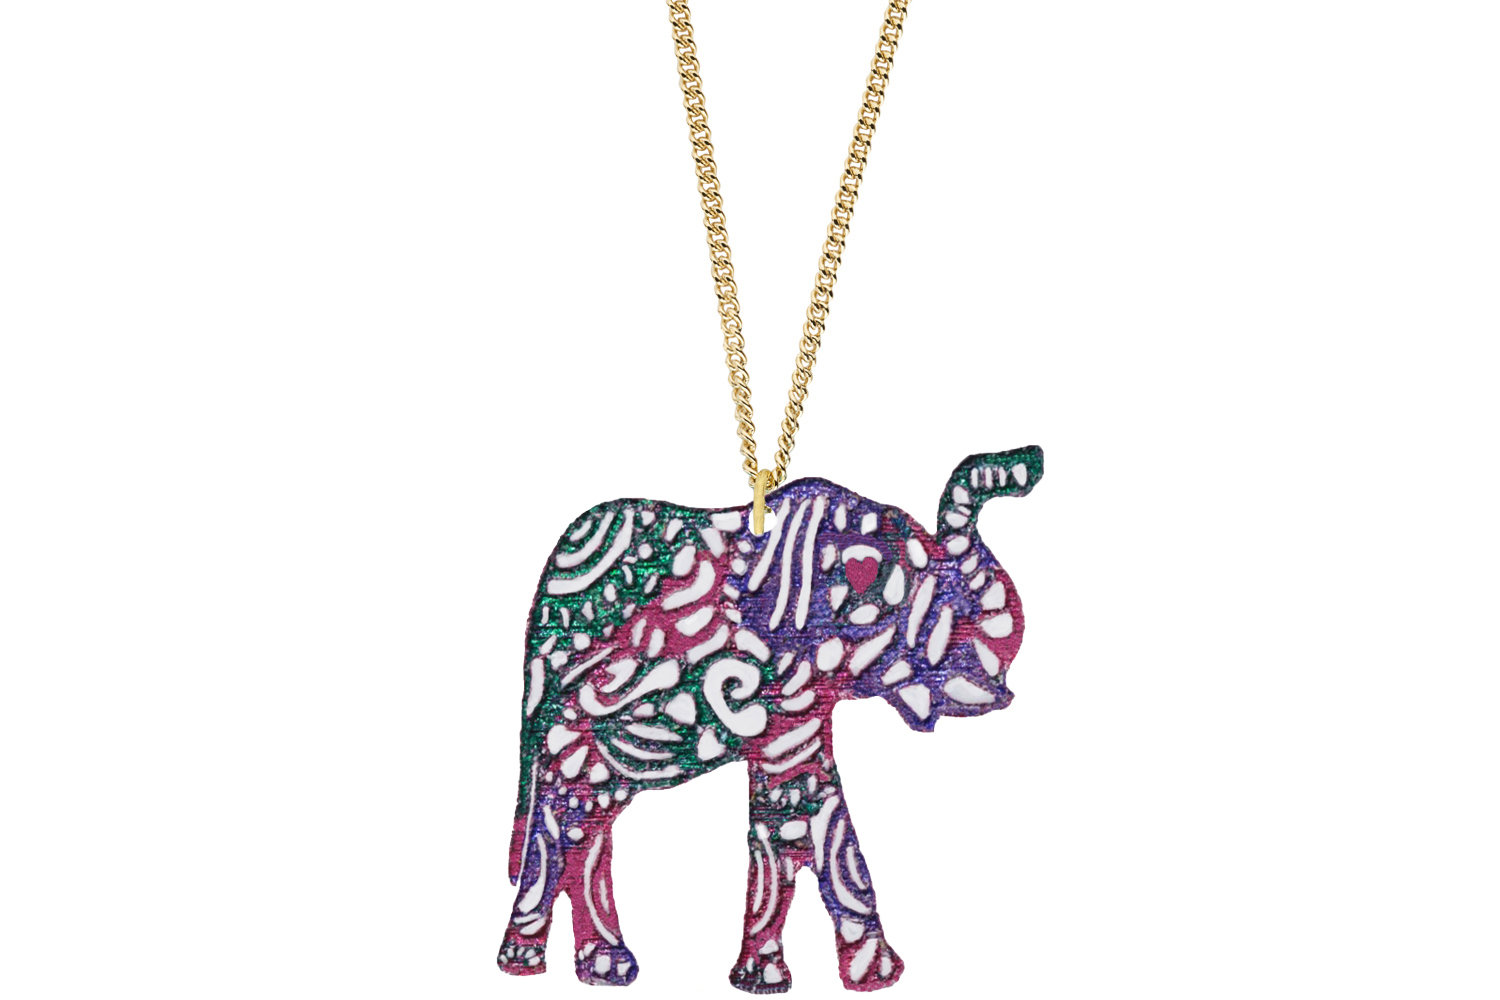 Elephant Aztec Shape Pendant Hand Painted Style on Chain Necklace